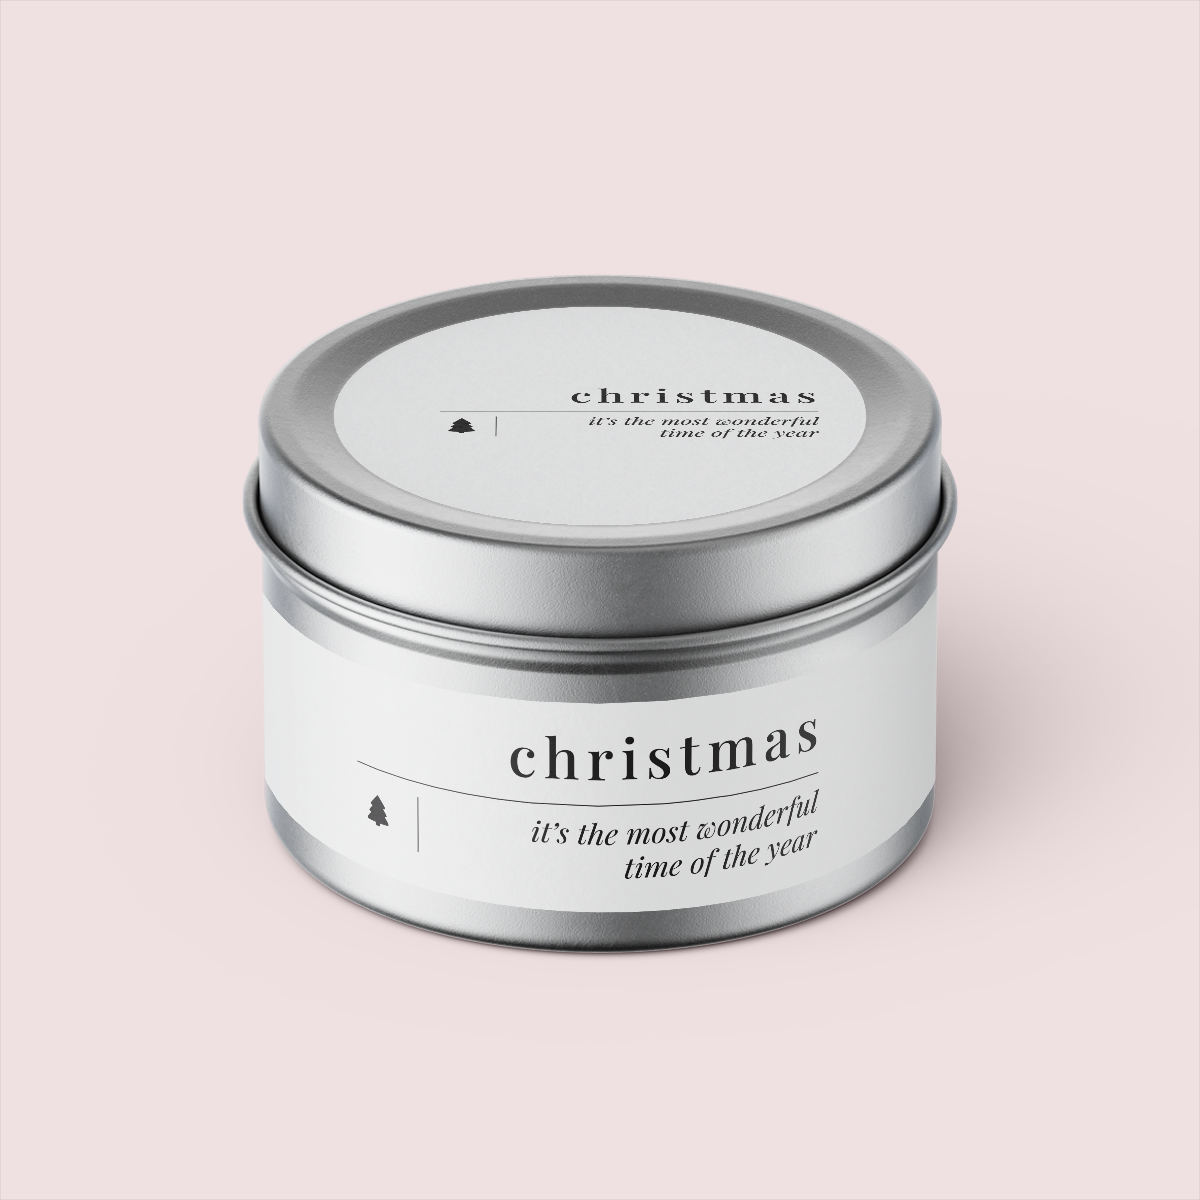 Minimalist Collection Christmas - Travel Tin Set - Design NINE - Matte/Gloss